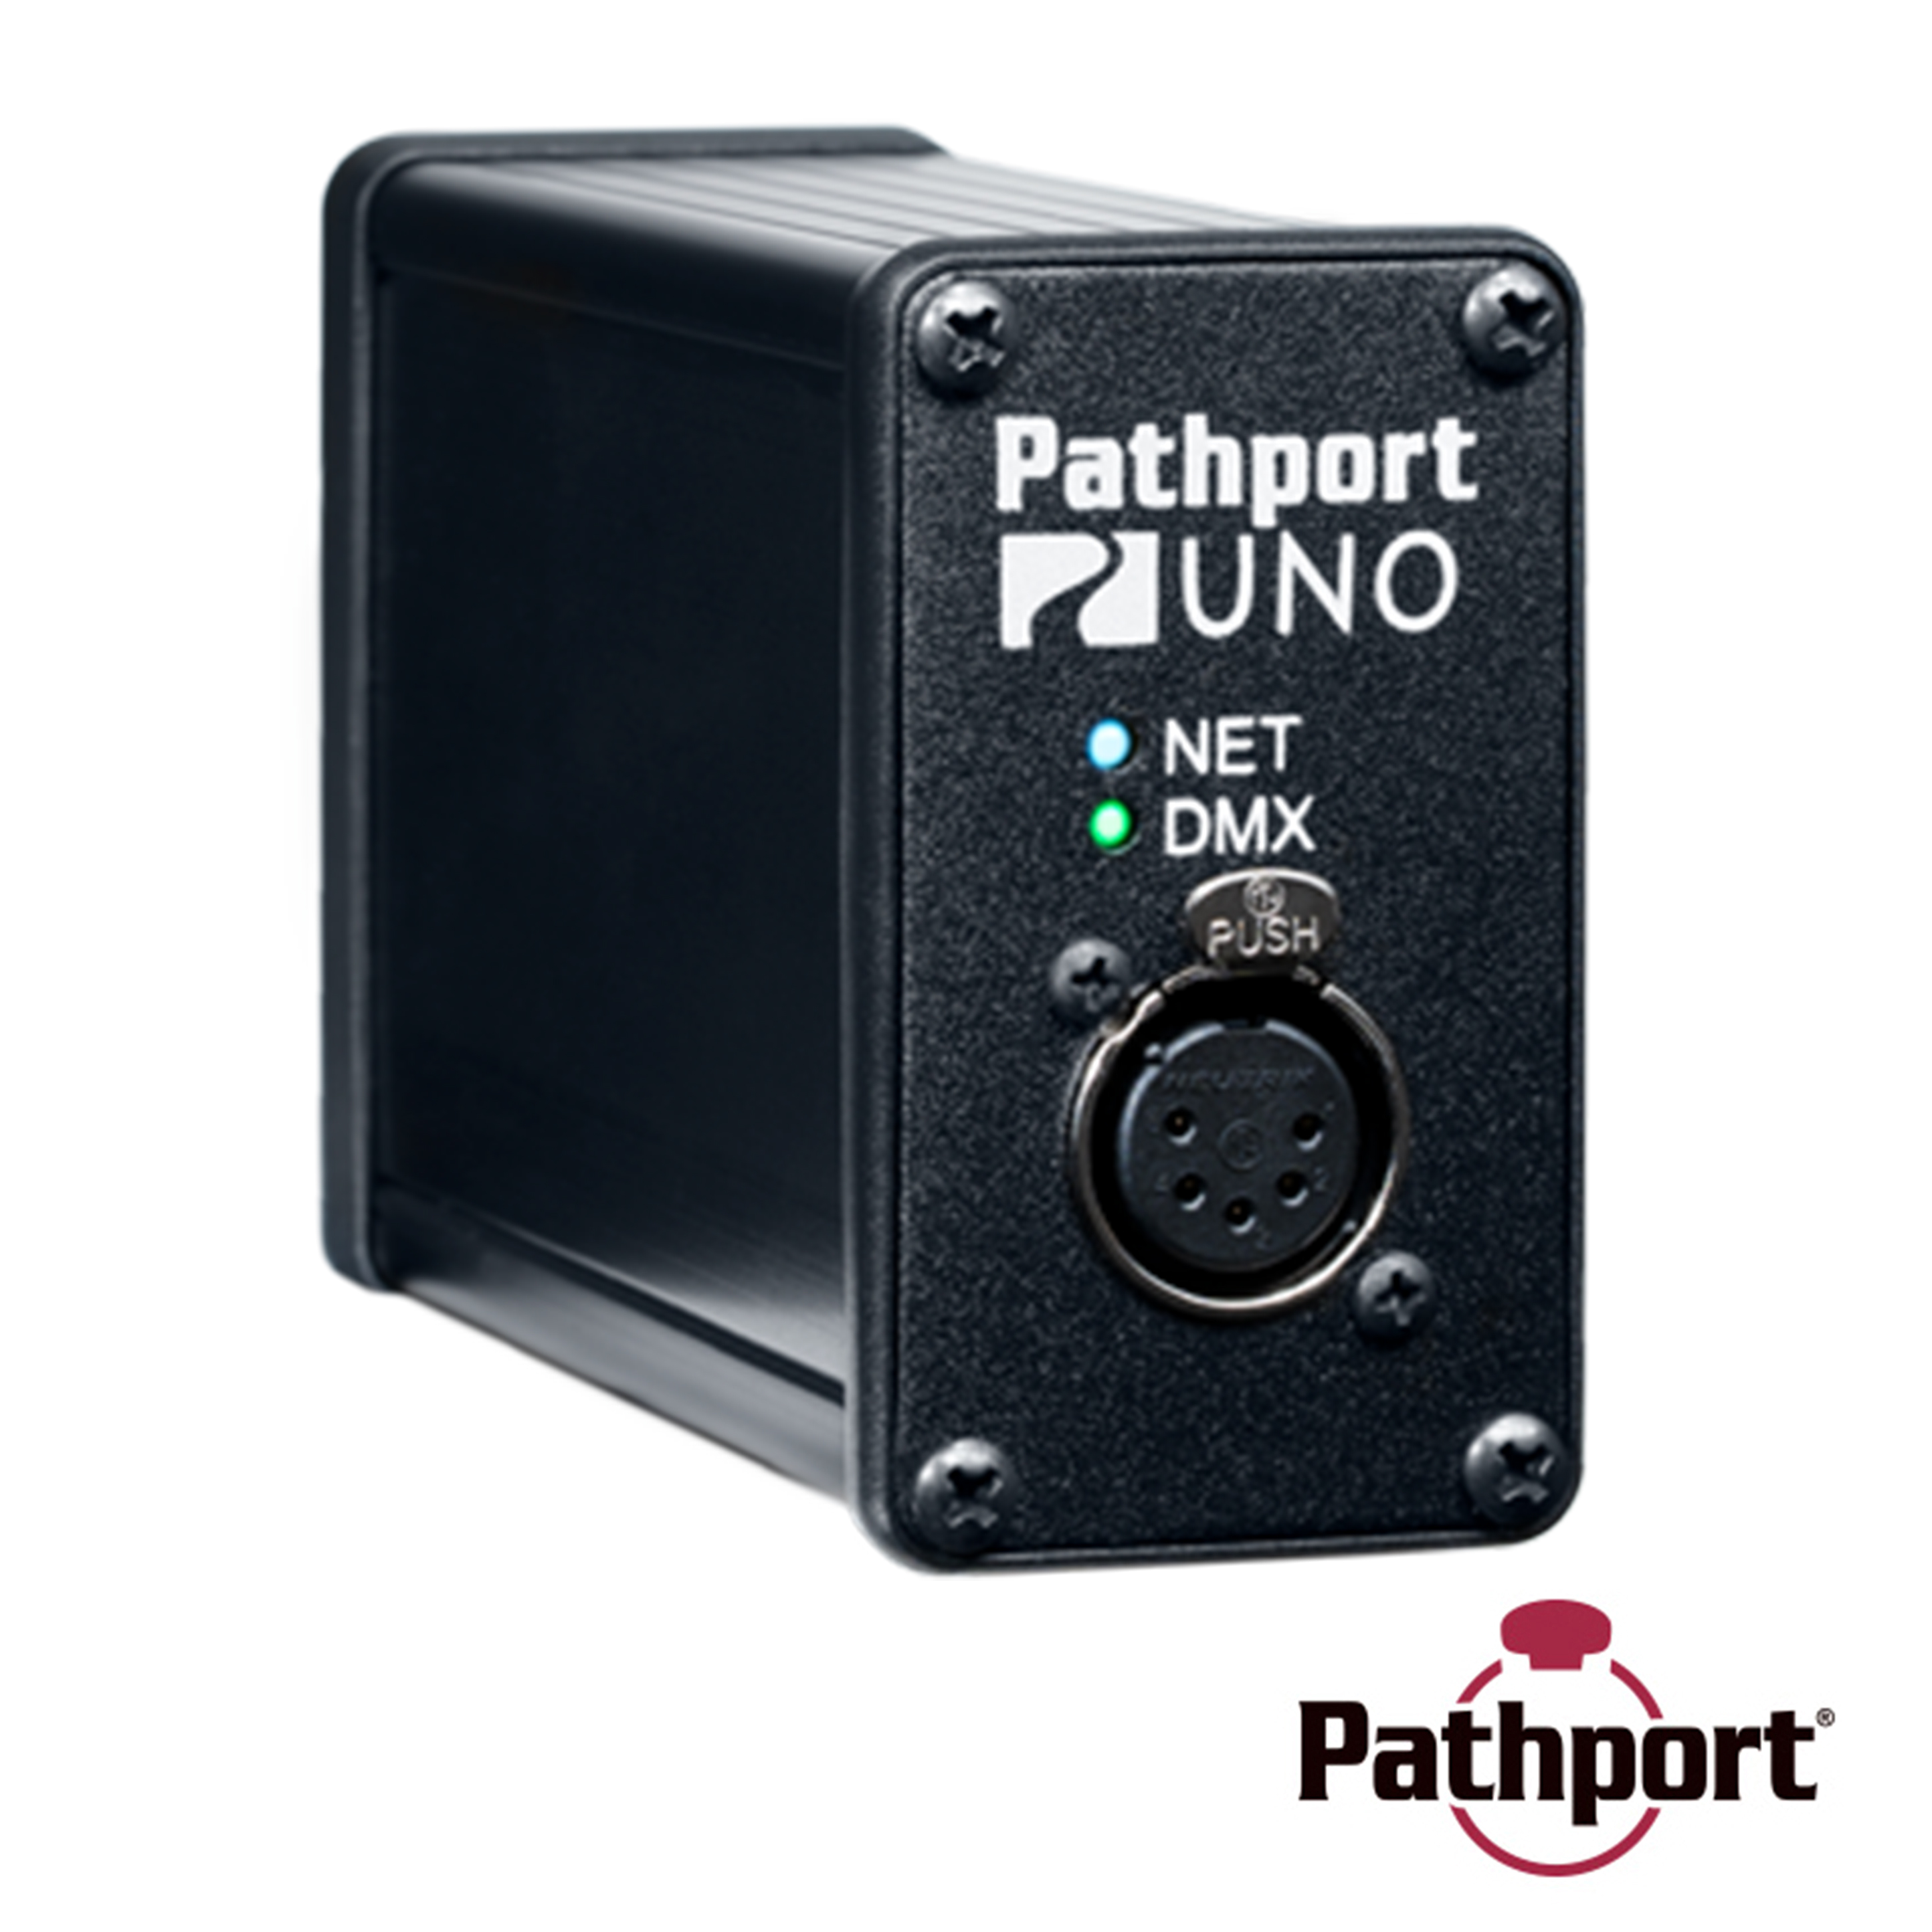 PWPP 1-port Portable Pathport UNO